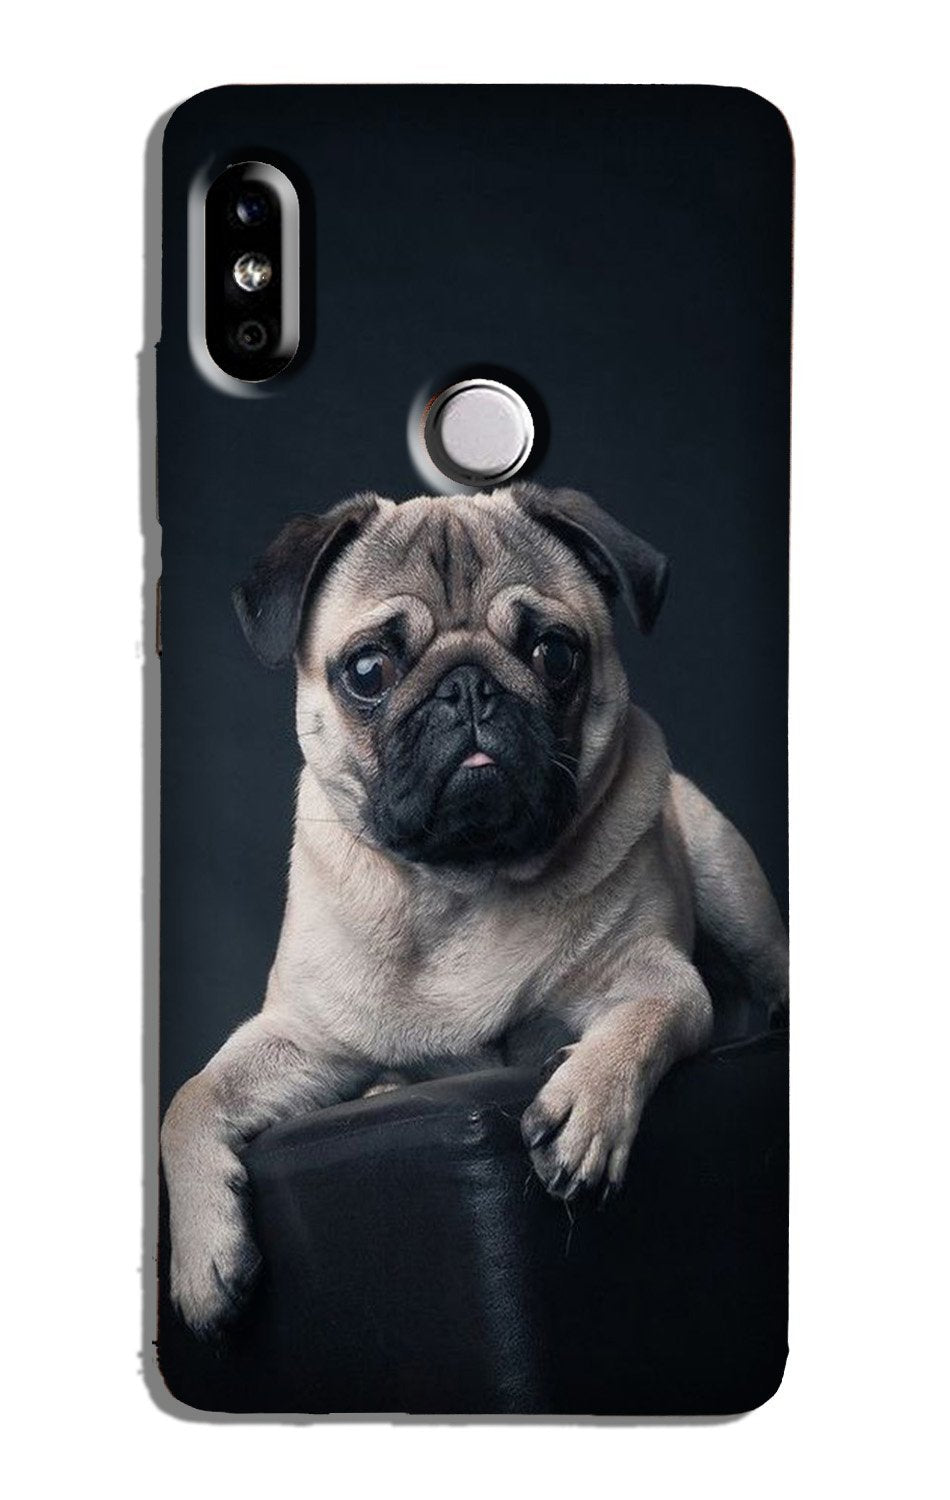 little Puppy Case for Redmi Note 5 Pro